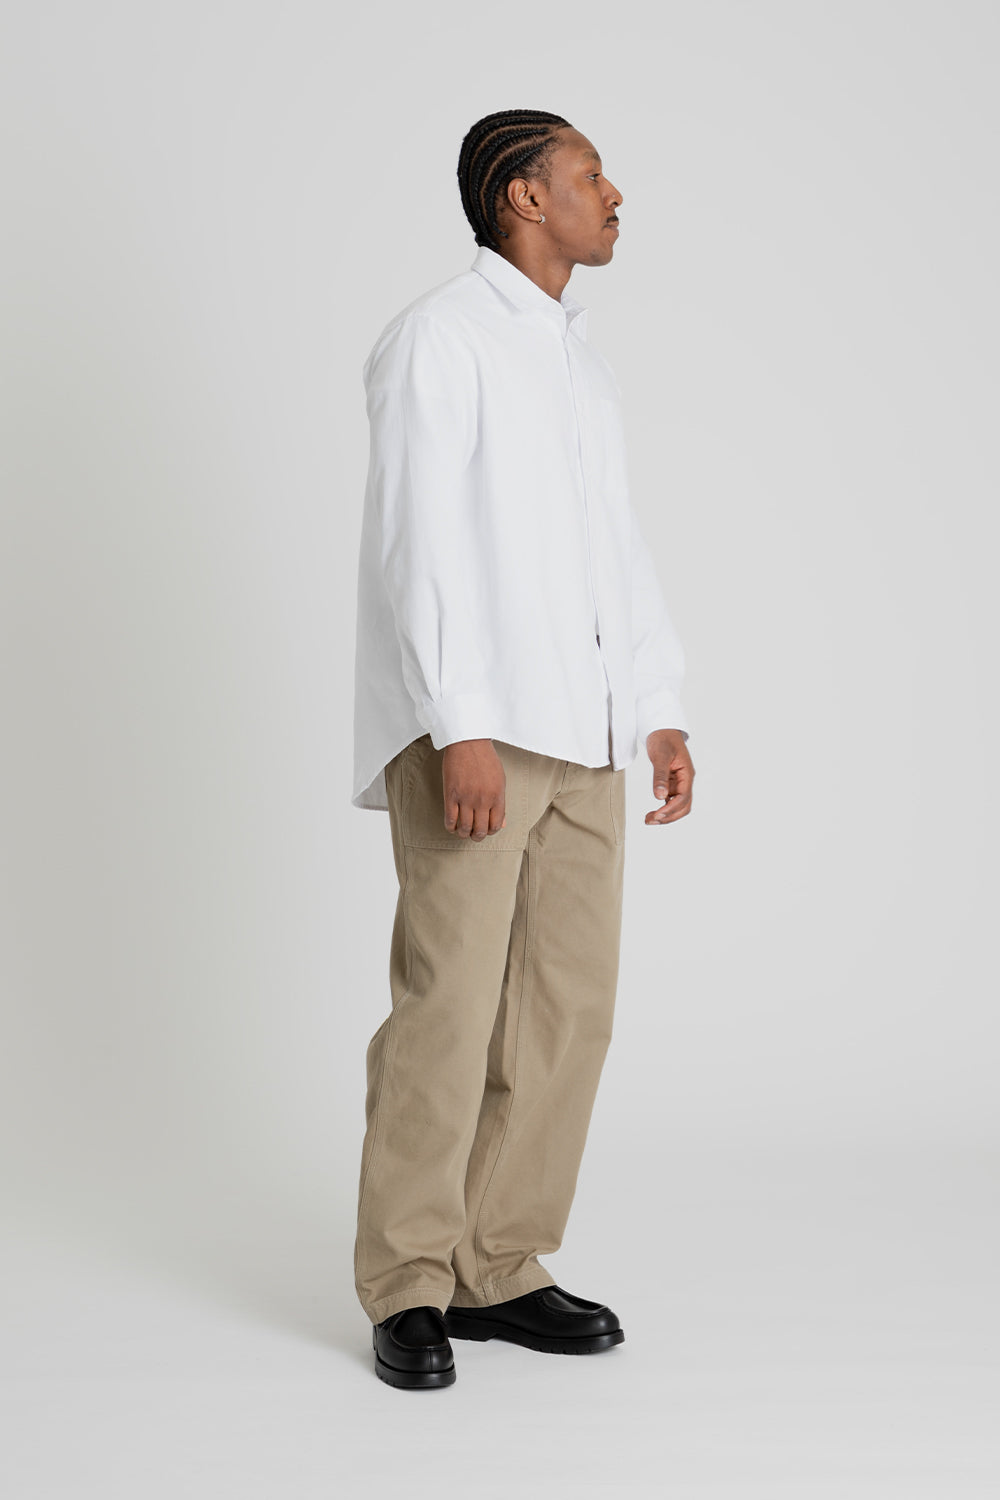 Frizmworks OG Oxford Oversized Shirt White Side